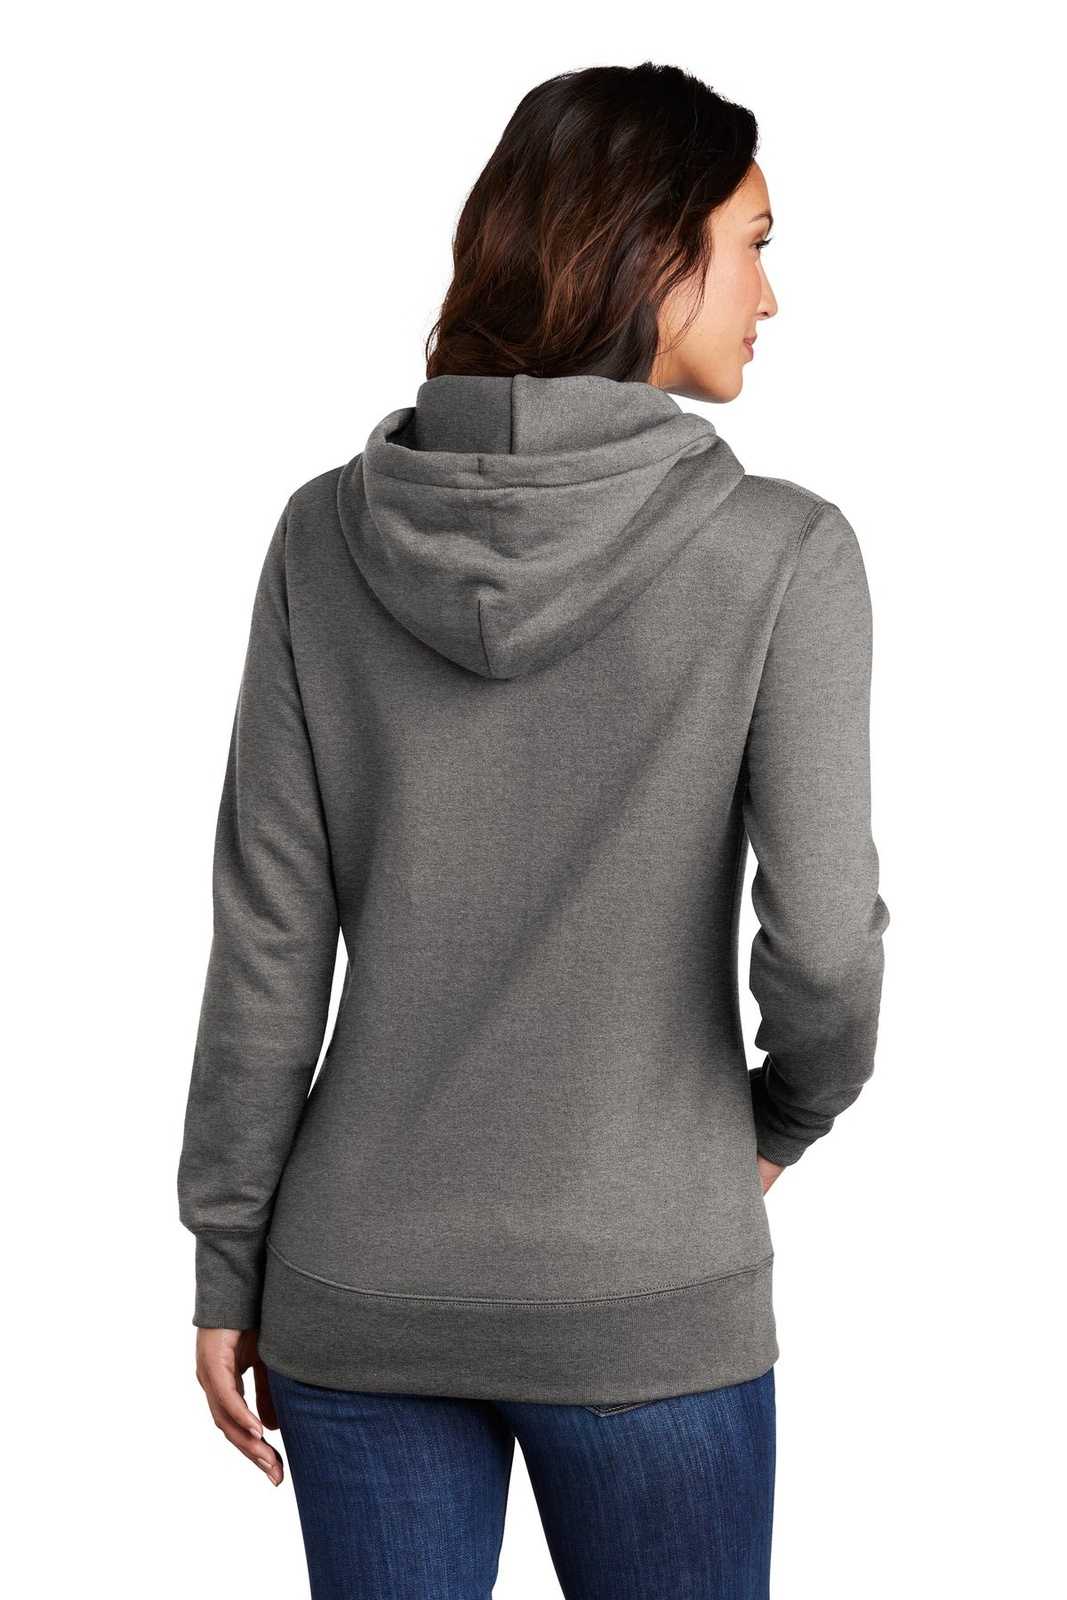 Port &amp; Company LPC78H Ladies Core Fleece Pullover Hooded Sweatshirt - Graphite Heather - HIT a Double - 2